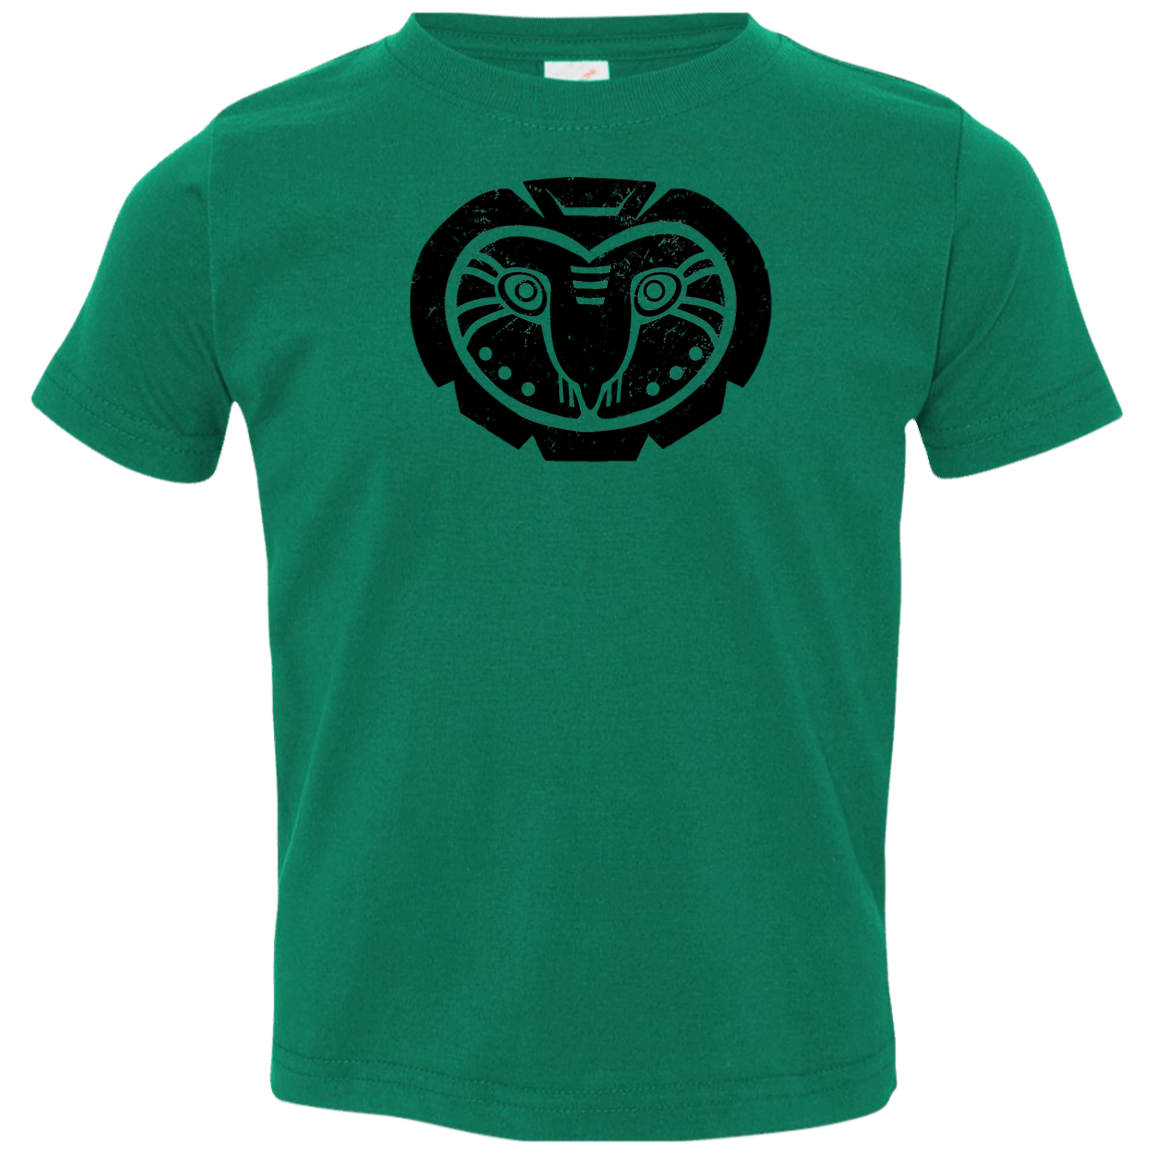 Black Distressed Emblem T-Shirt for Toddlers (Barn Owl/Grim)